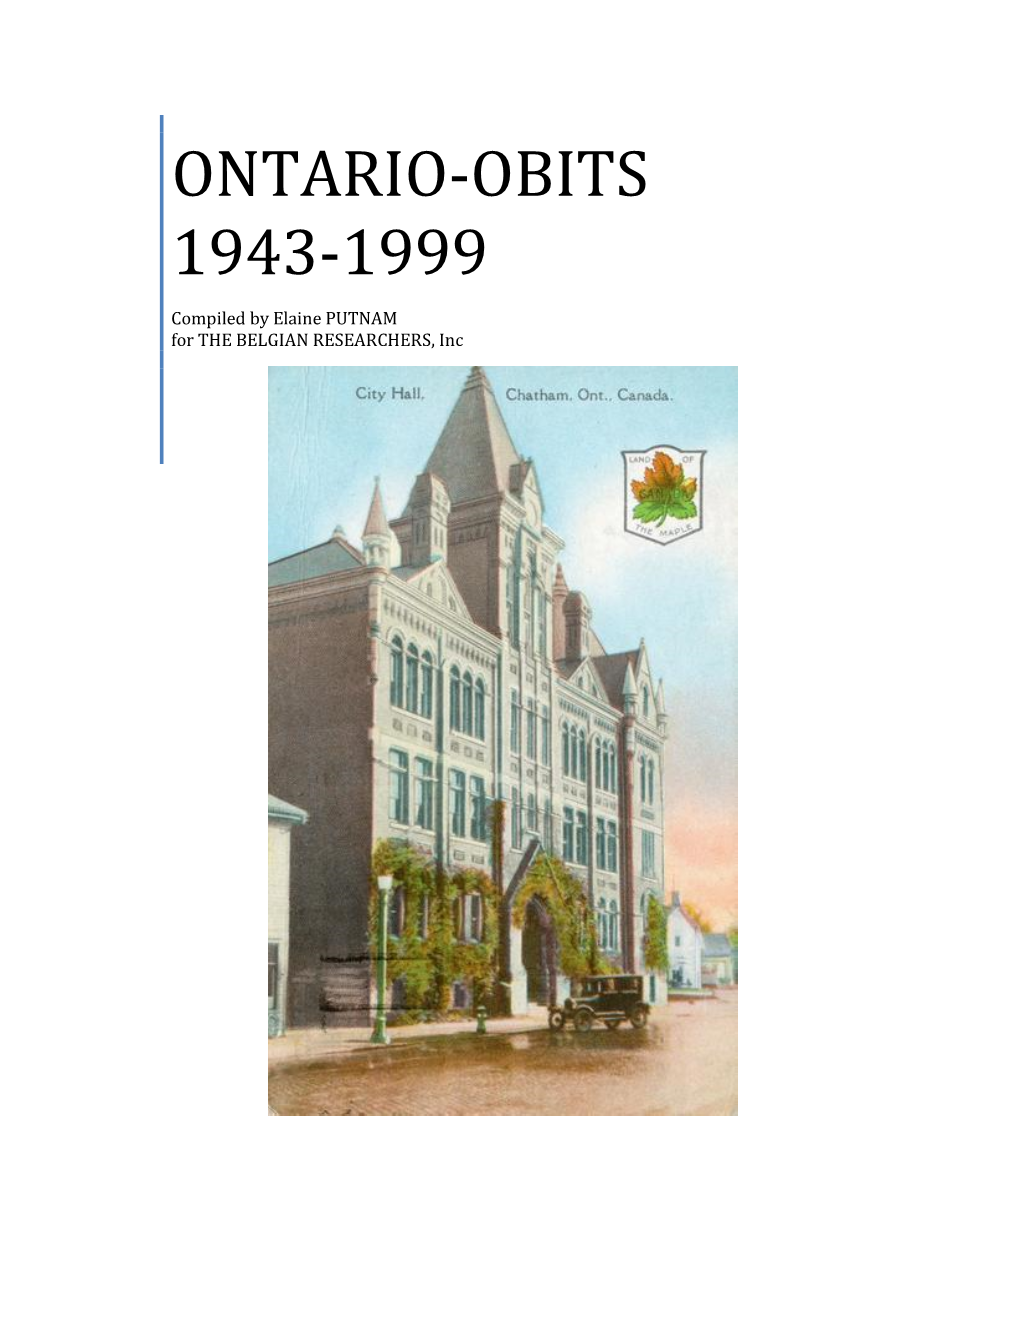 Ontario-Obits 1943-1999